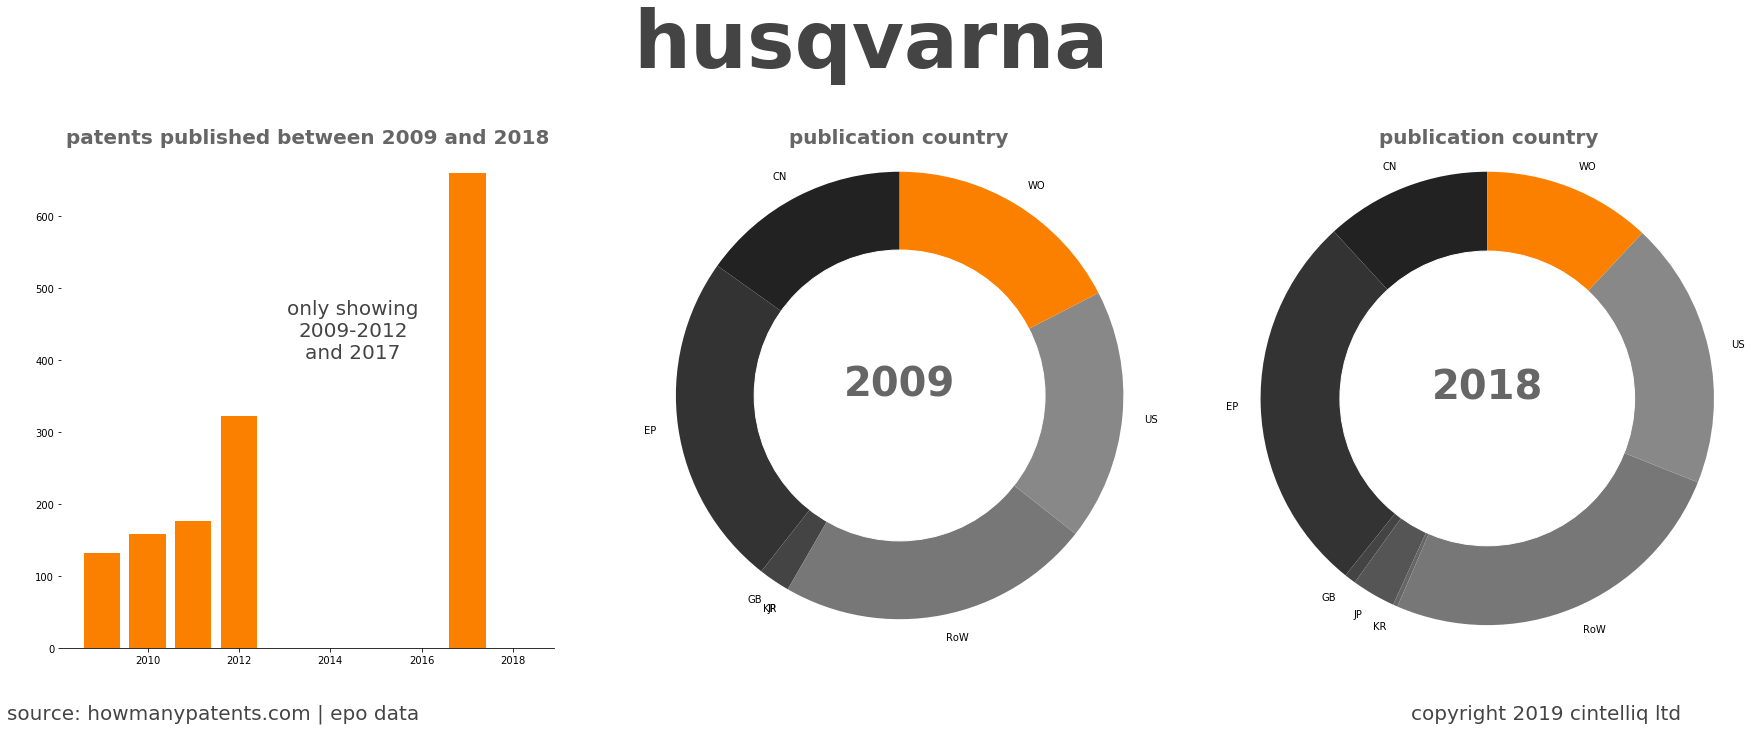 summary of patents for Husqvarna